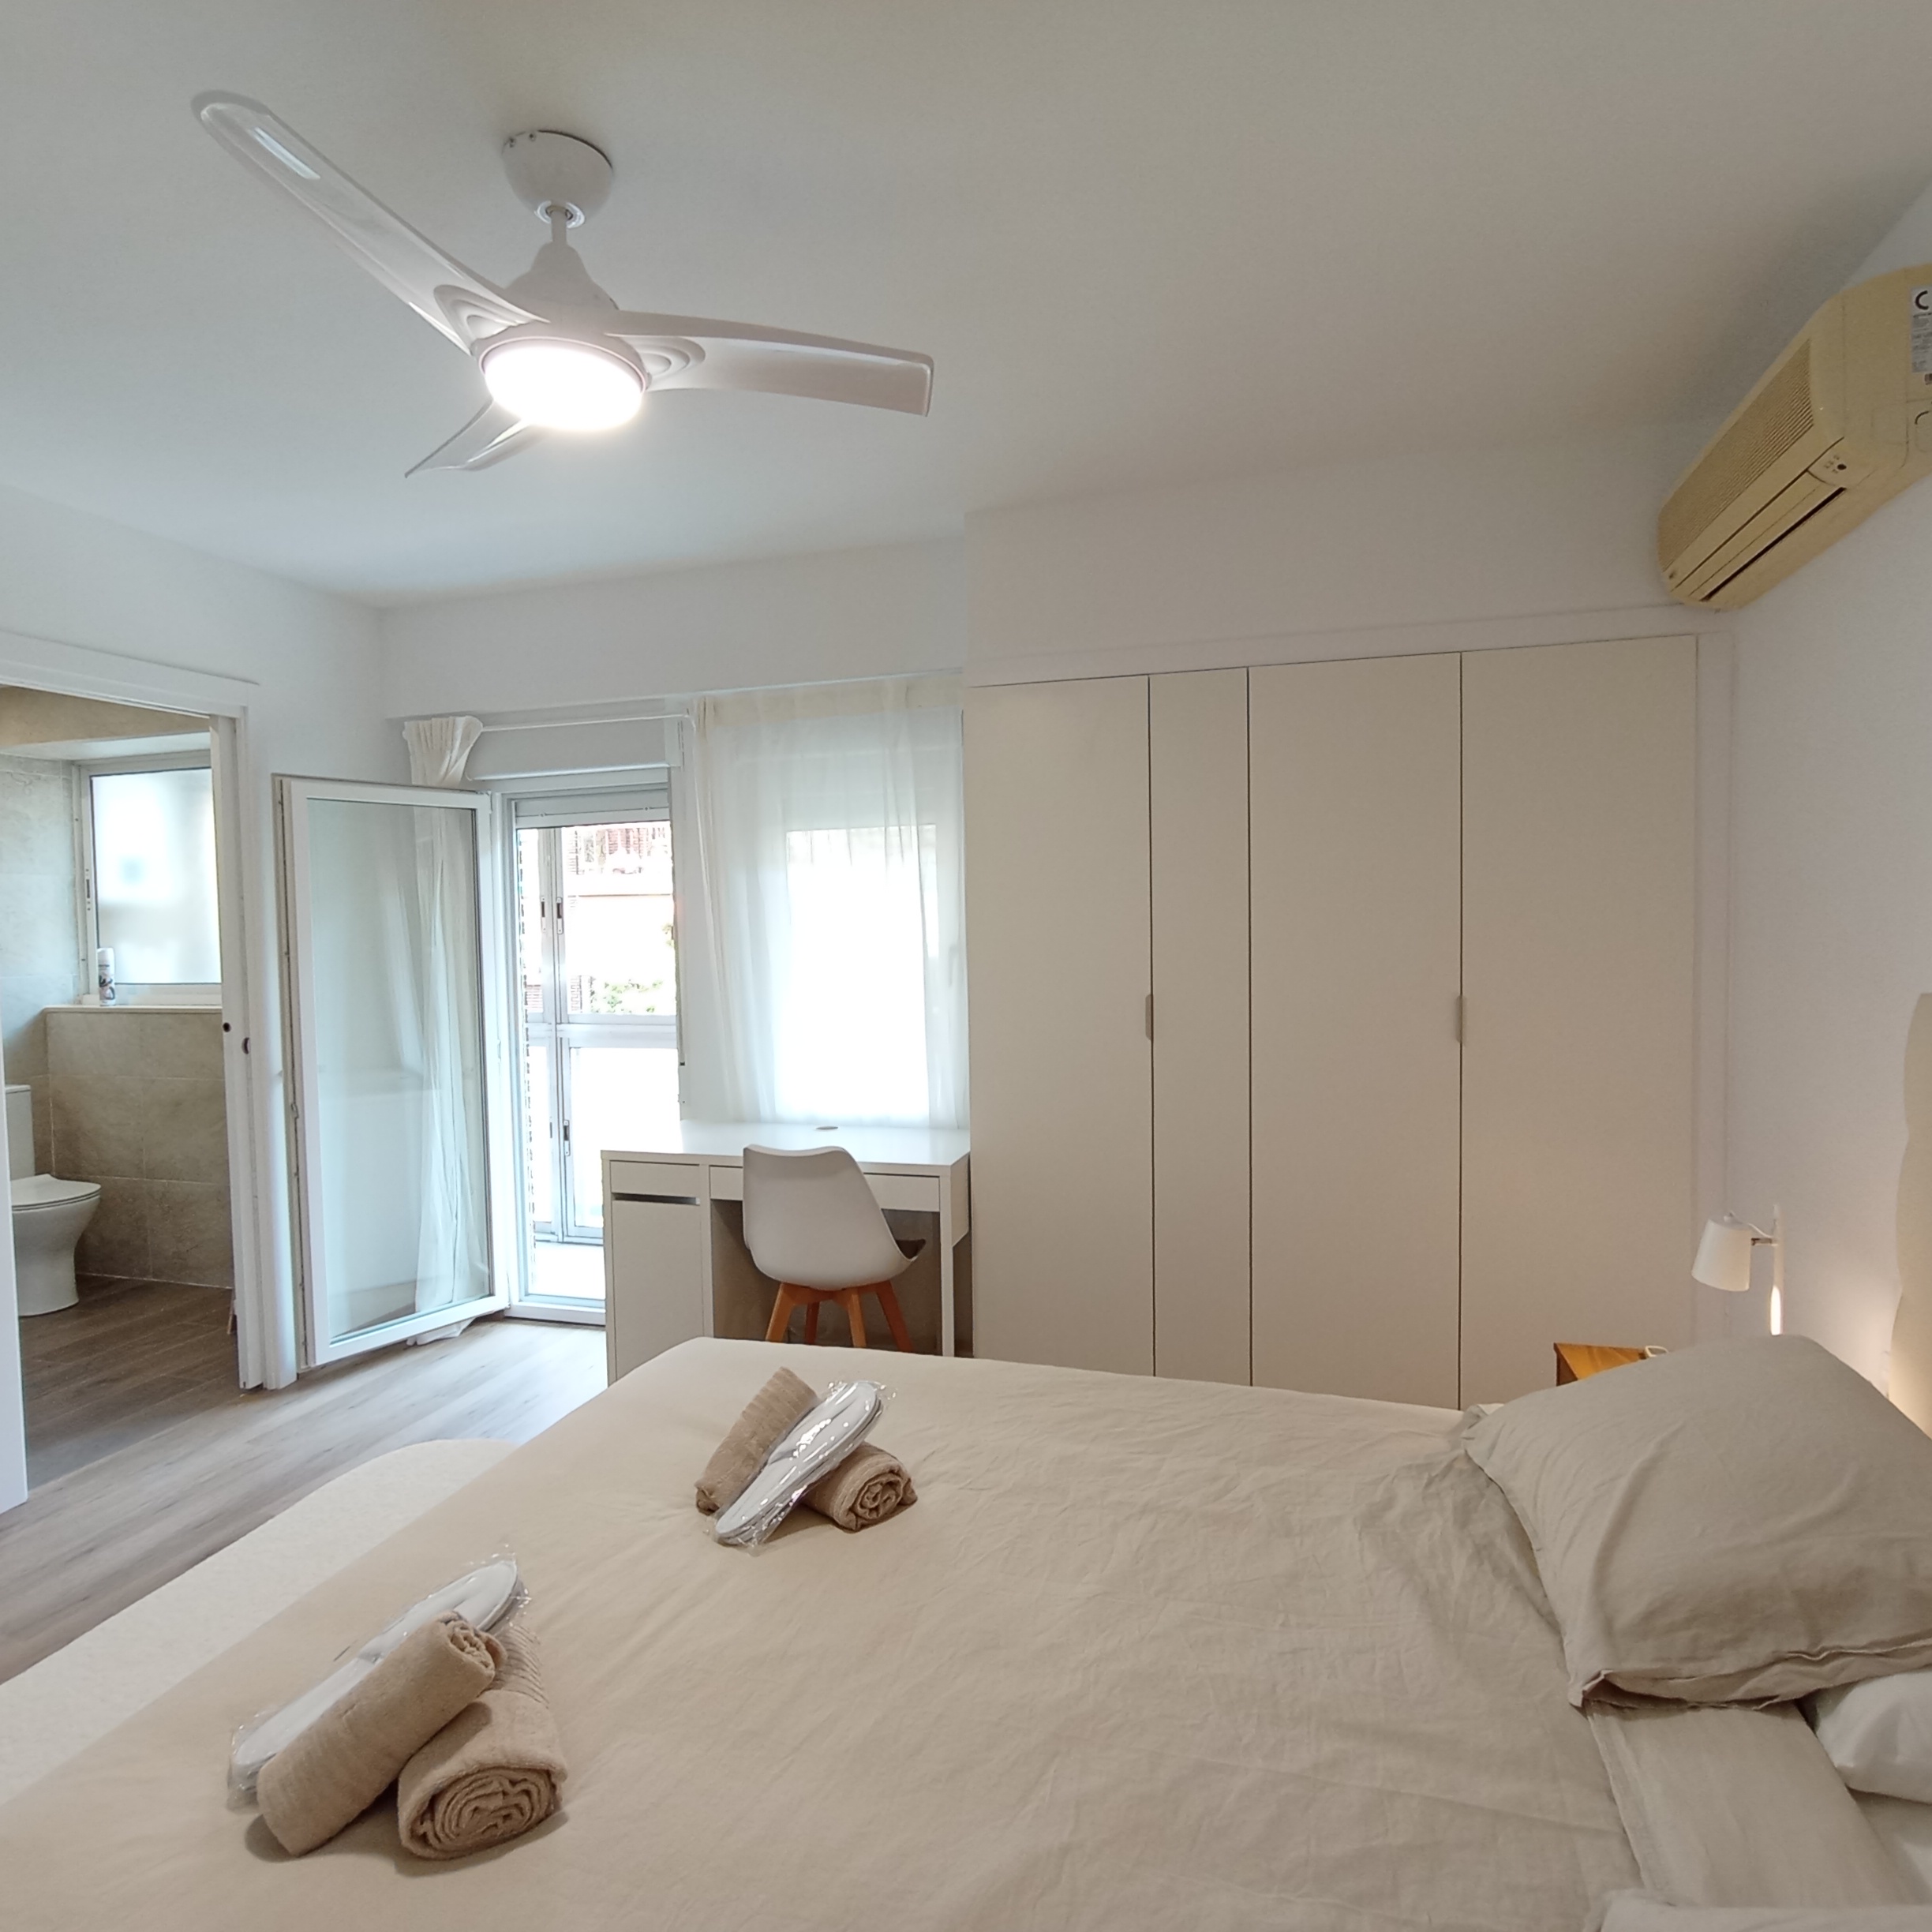 Trafalgar - 3 Bedroom apartment for rent in Valencia double bedroom 6